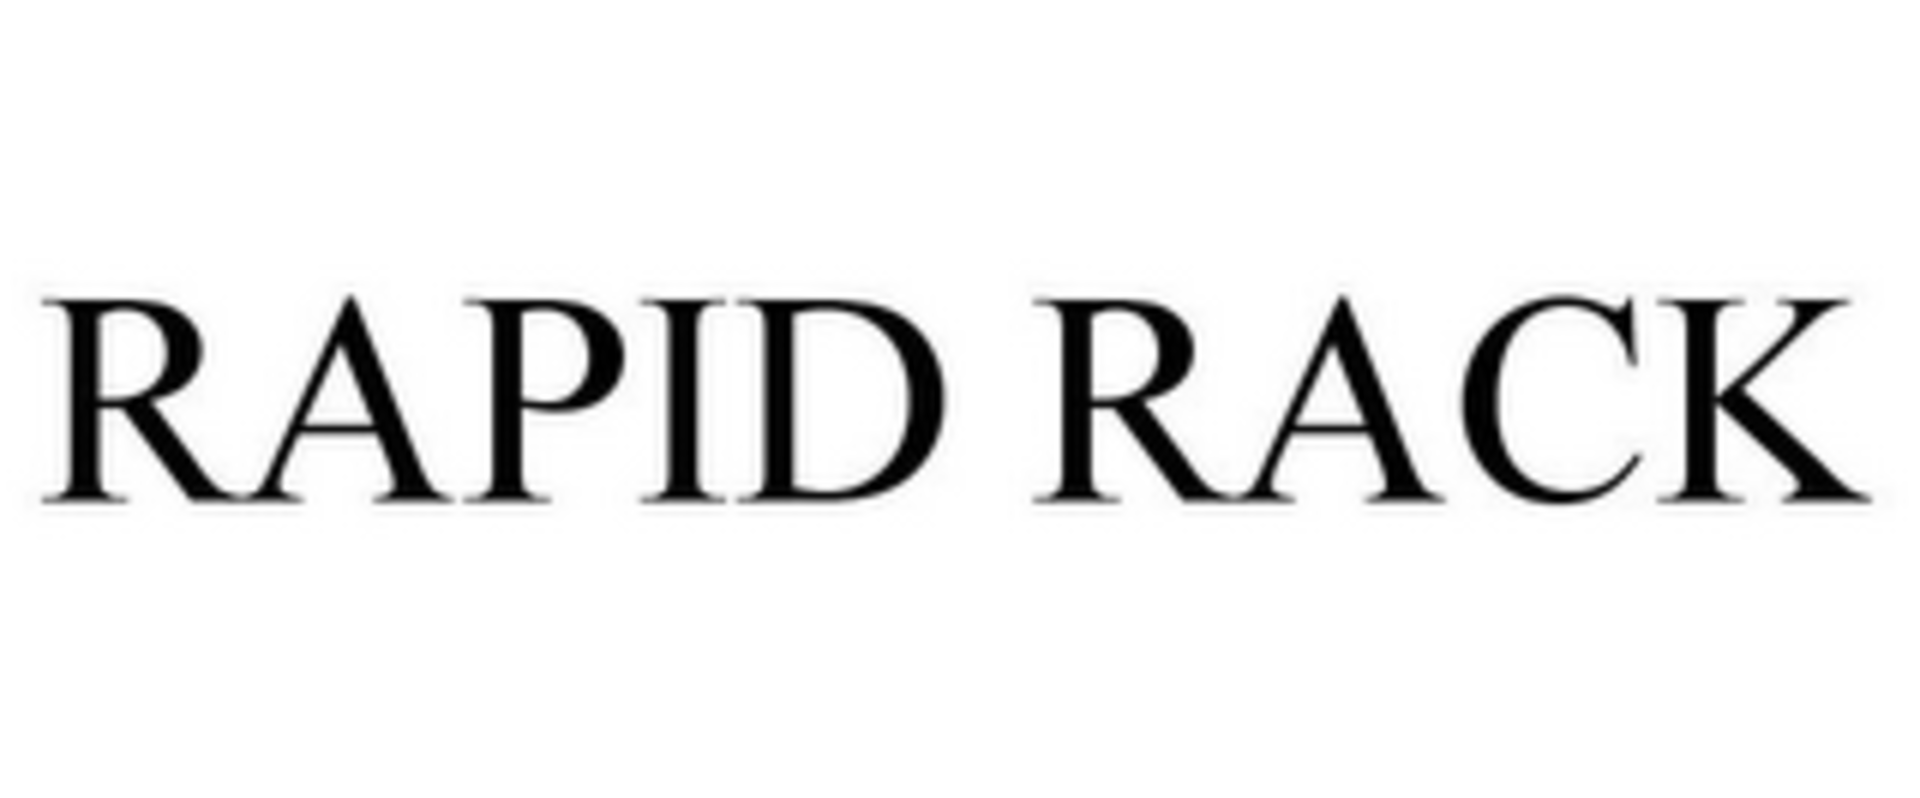 "RAPID RACK" (IP-Intellectual Property)